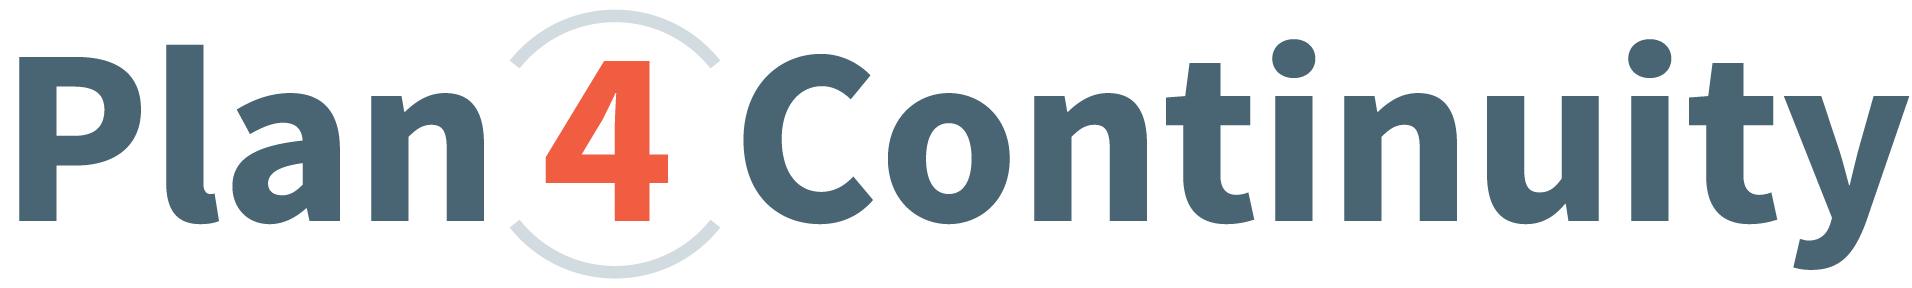 plan4continuity-logo